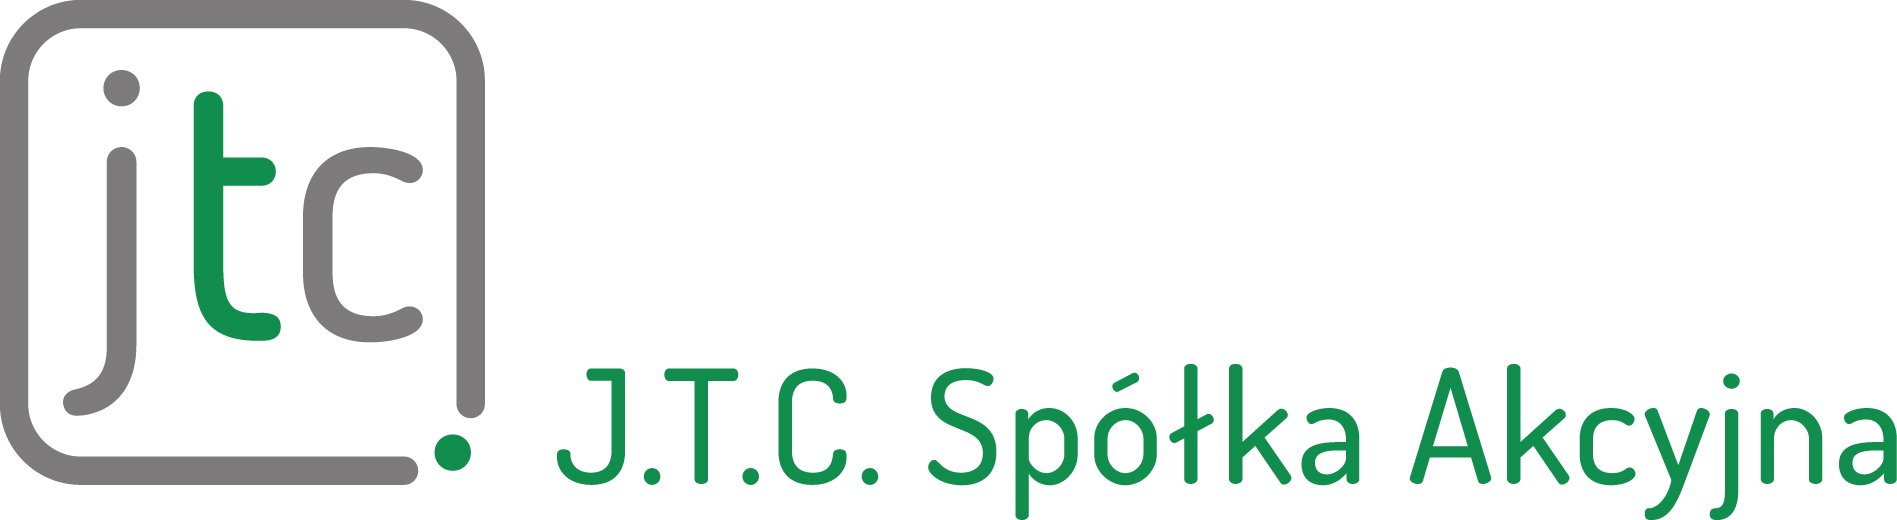 logo_jtc